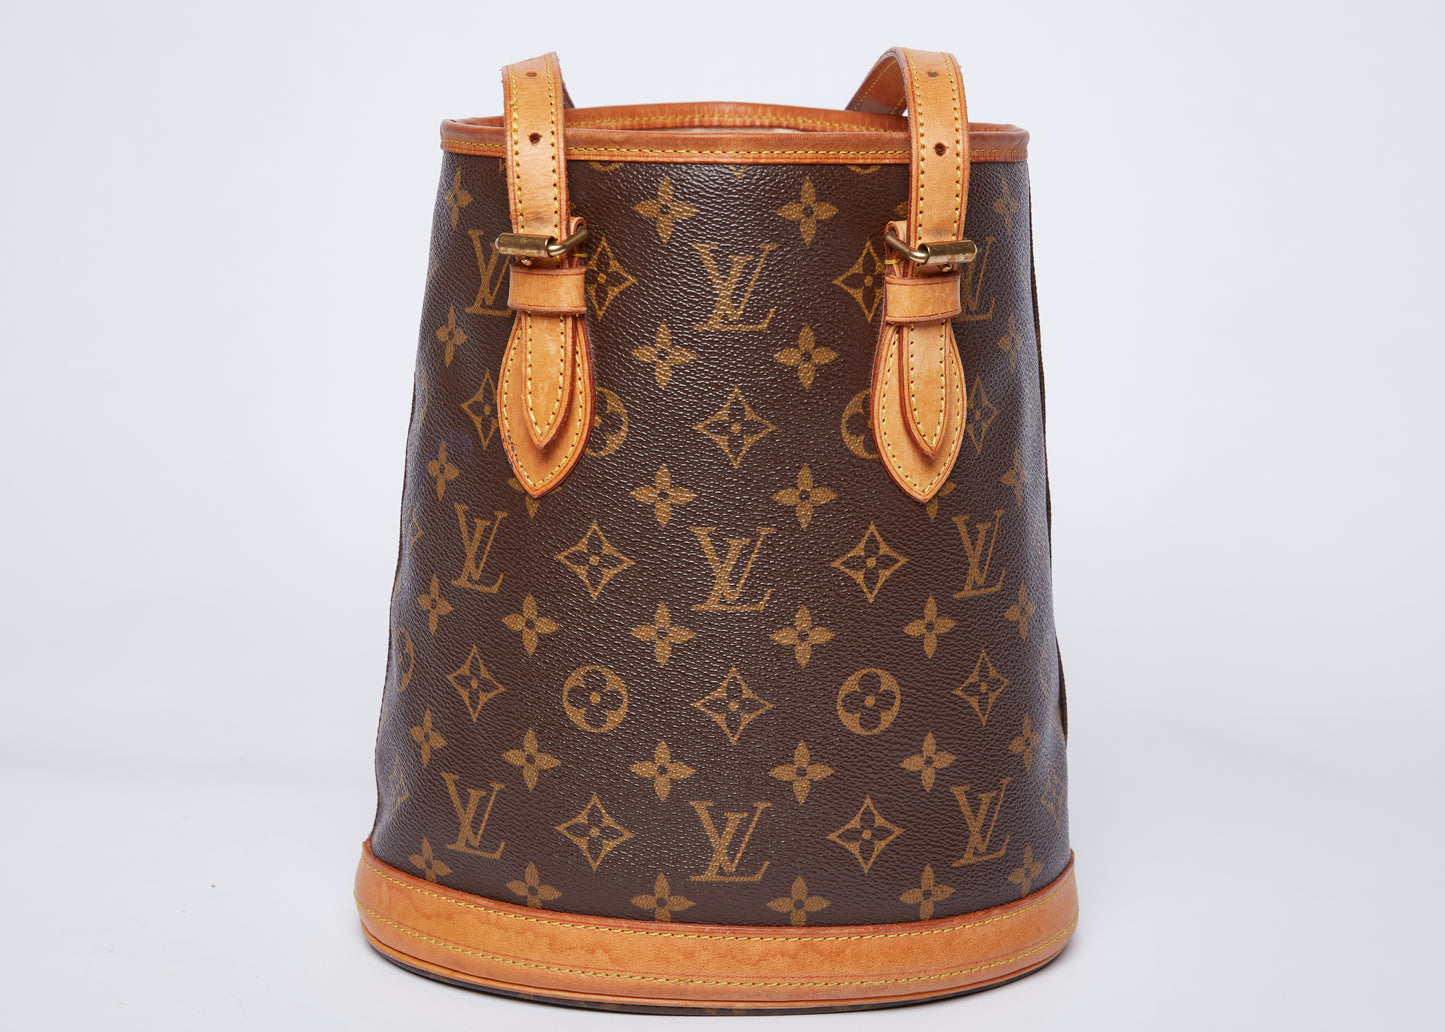 Louis Vuitton Vintage Monogram Petite Bucket Bag, $899